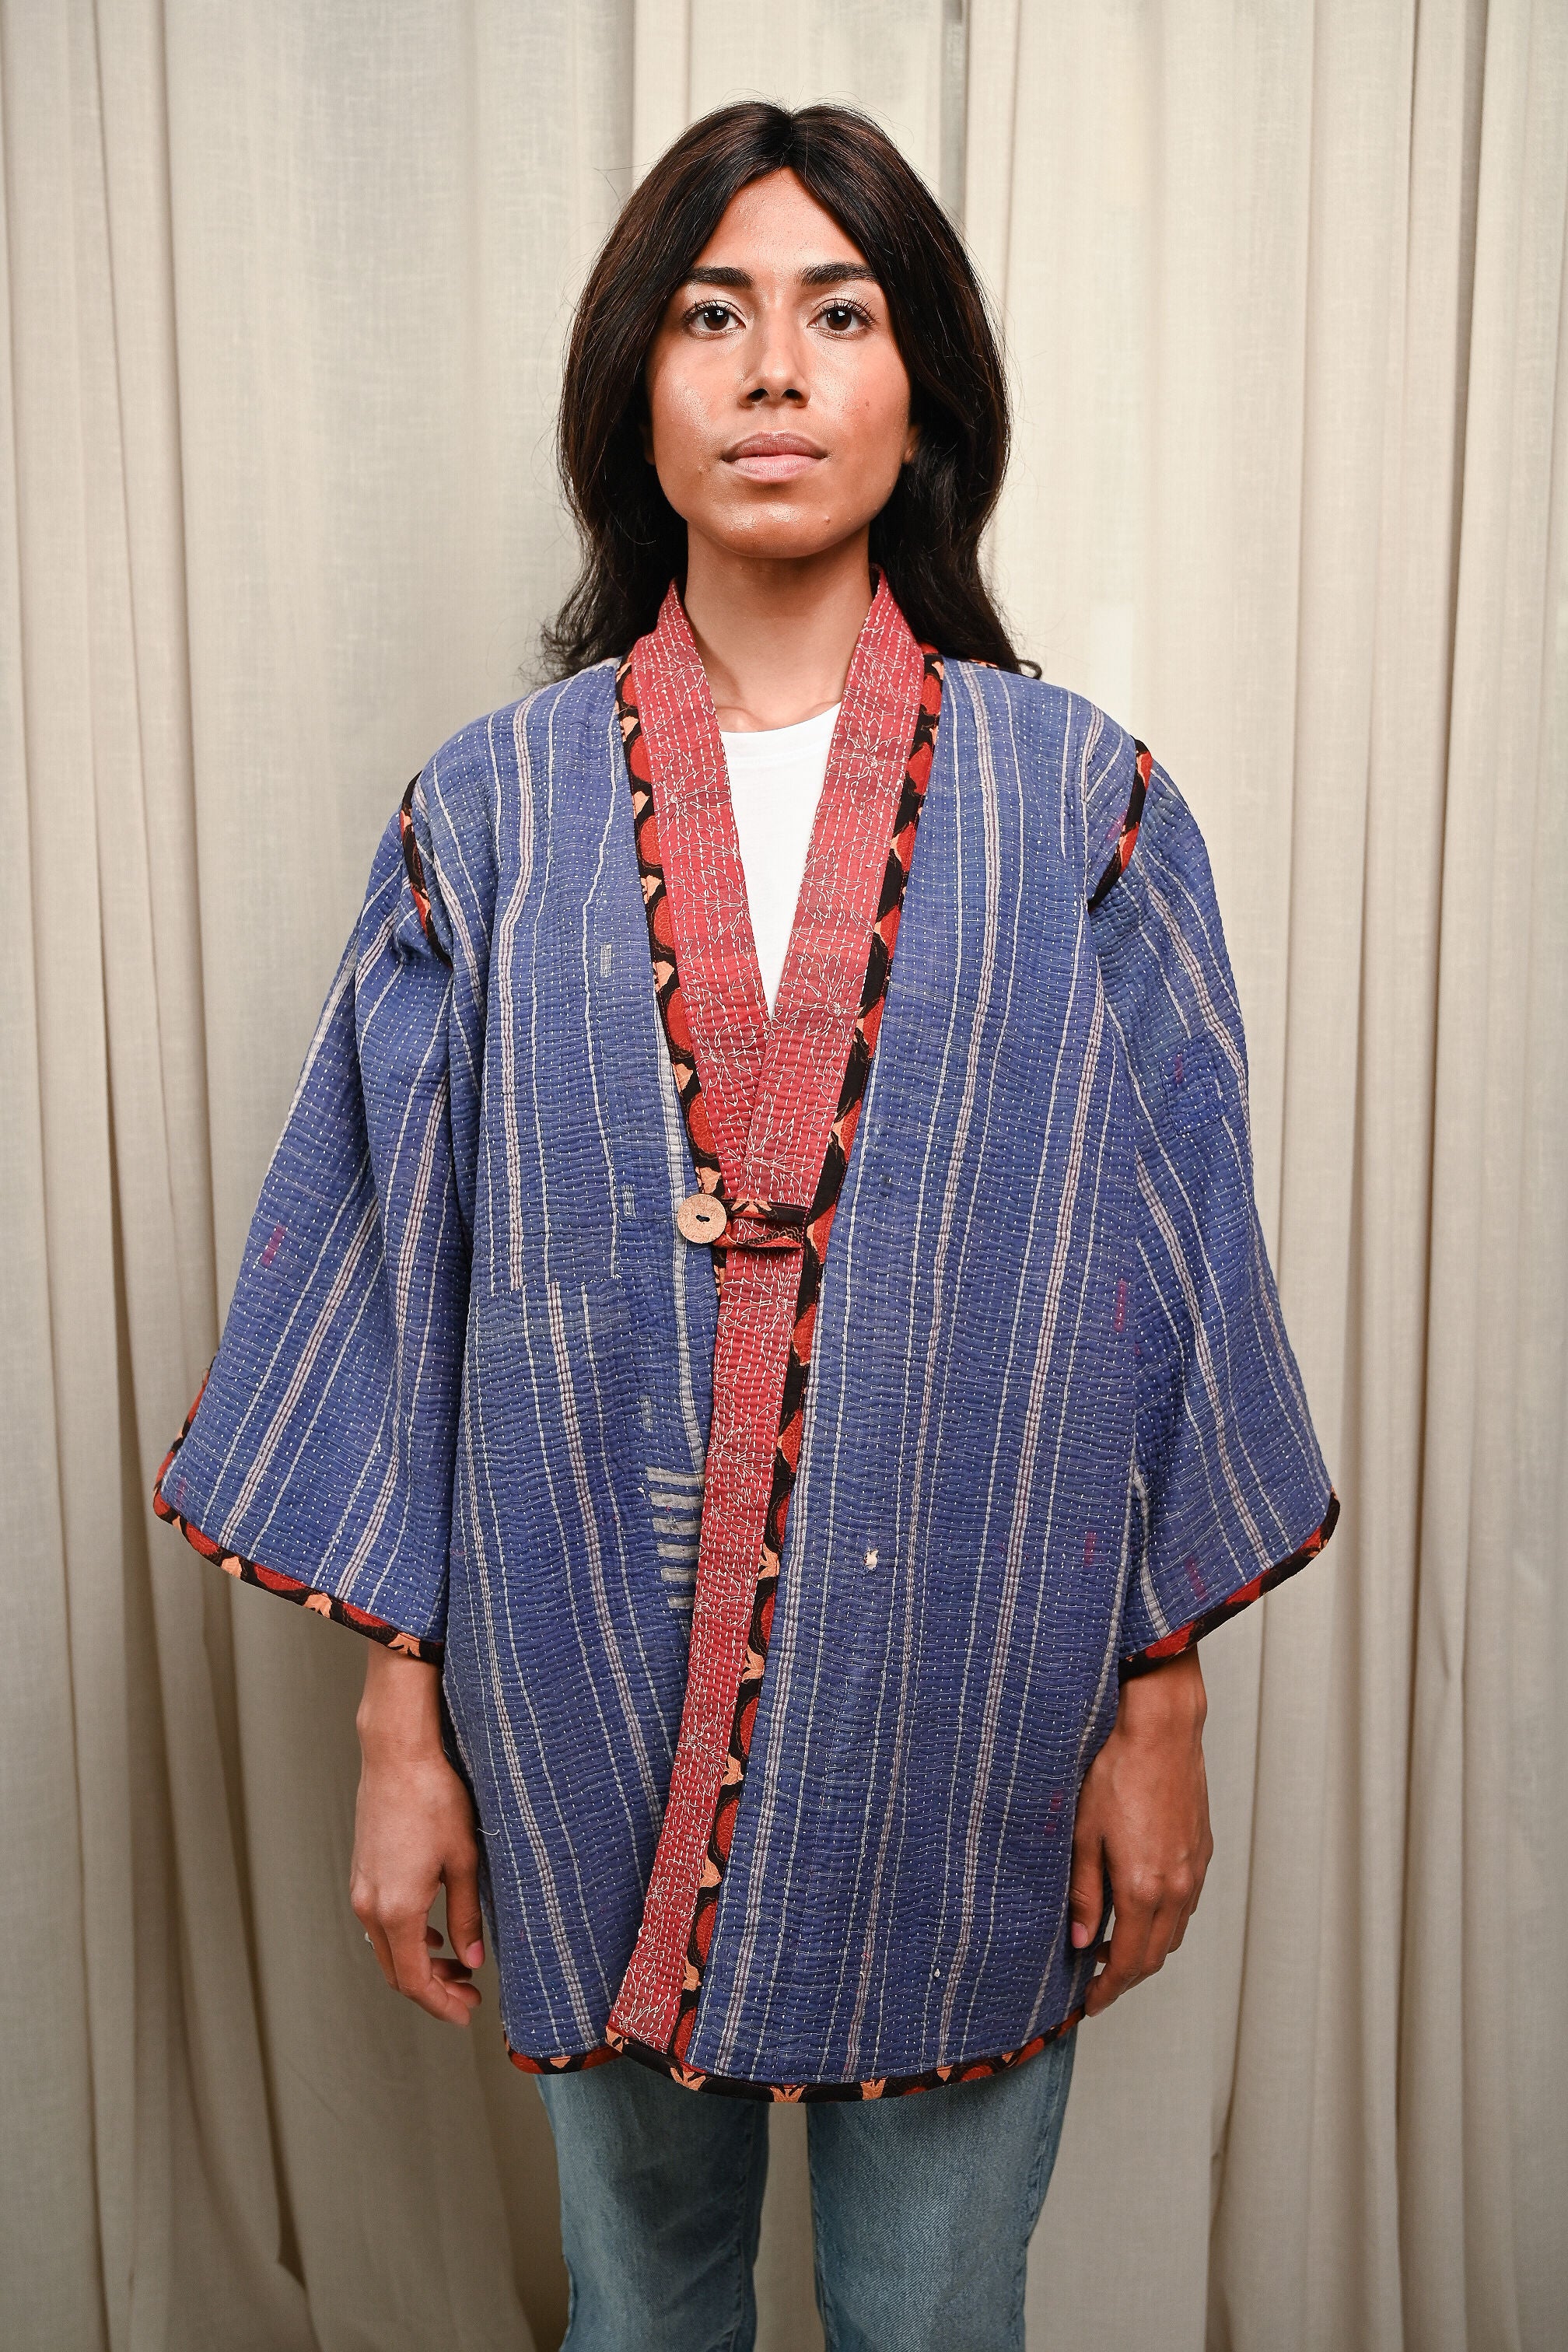 Reversible Kimono